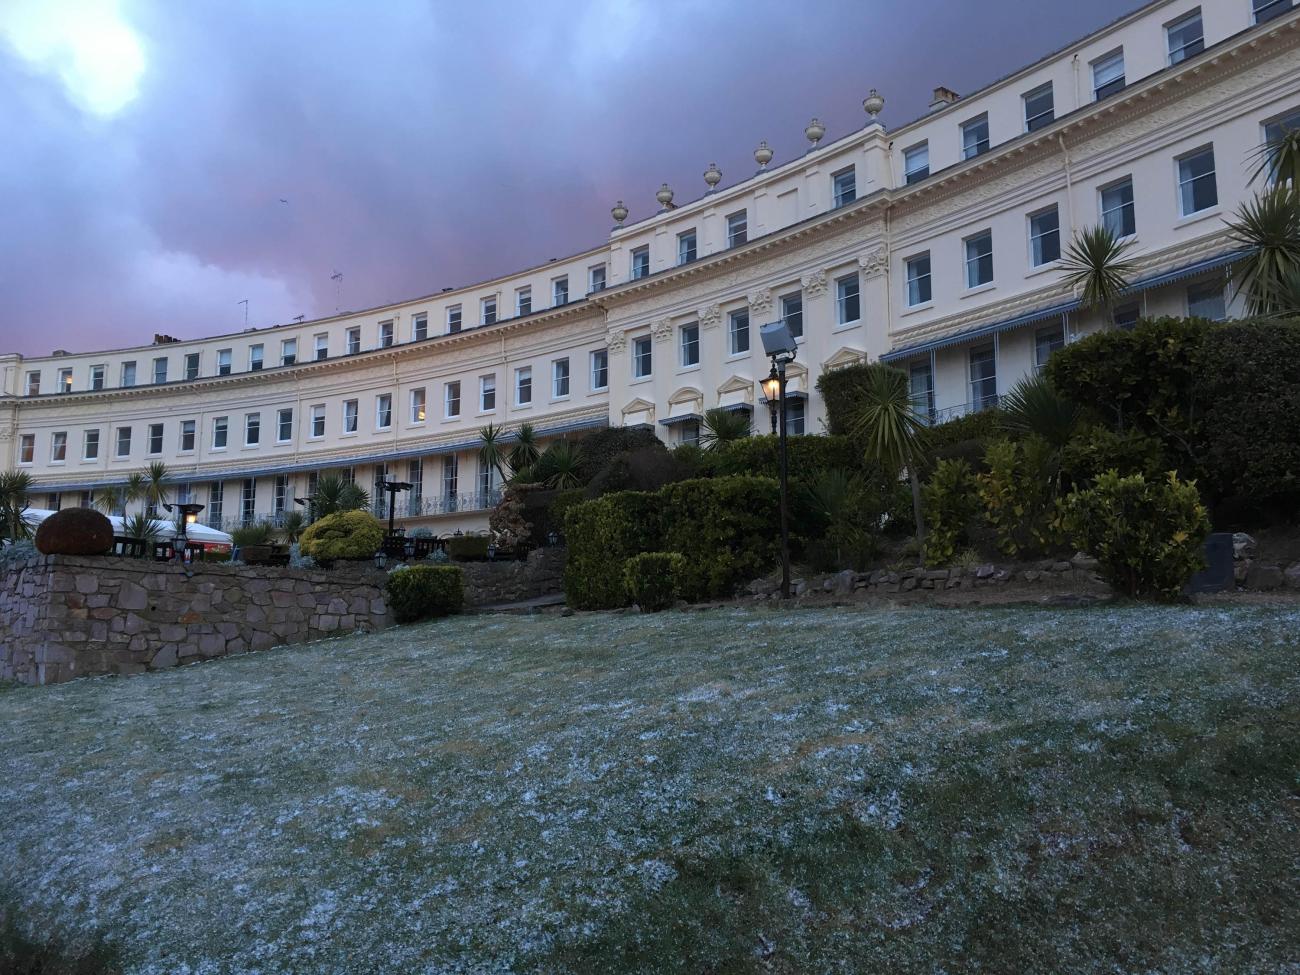 Exterior of the Osborne Hotel, Torquay with snow